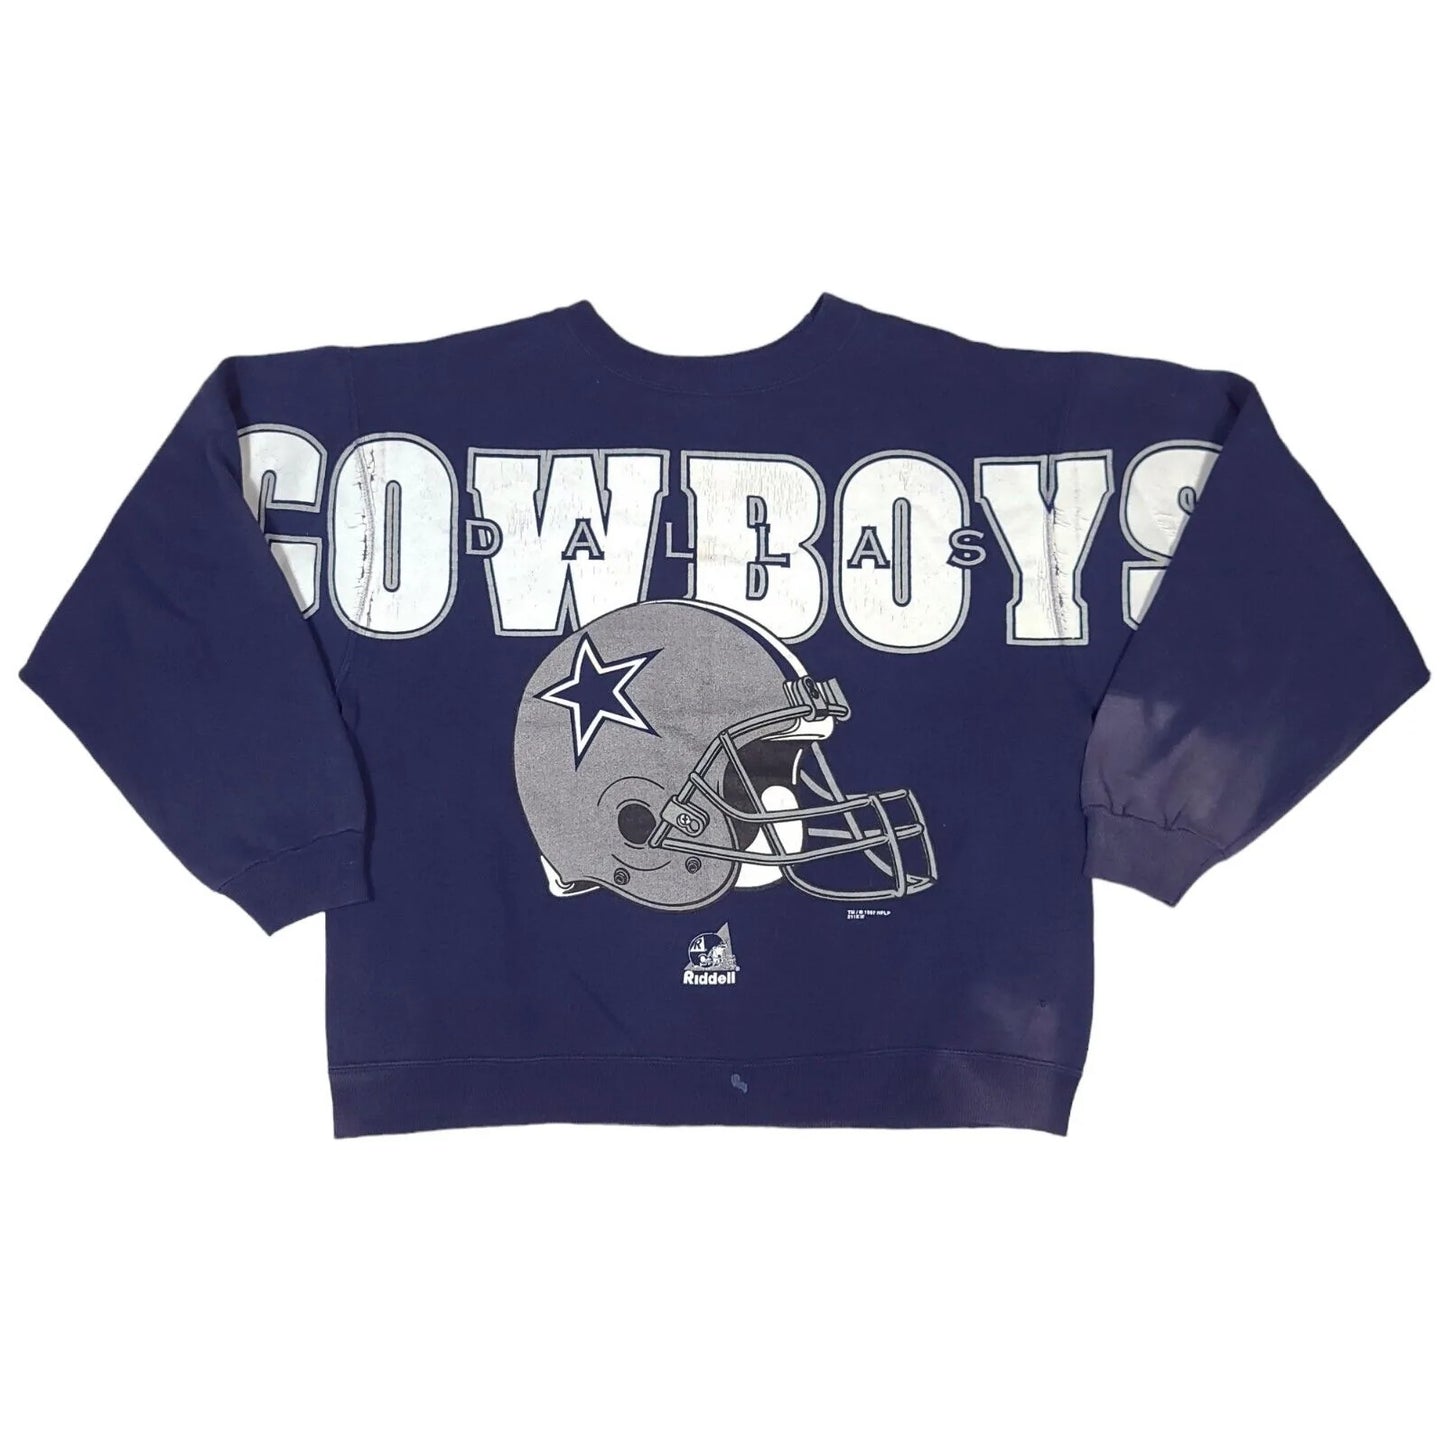 Dallas Cowboys Champknit Blue Sweatshirt 1997